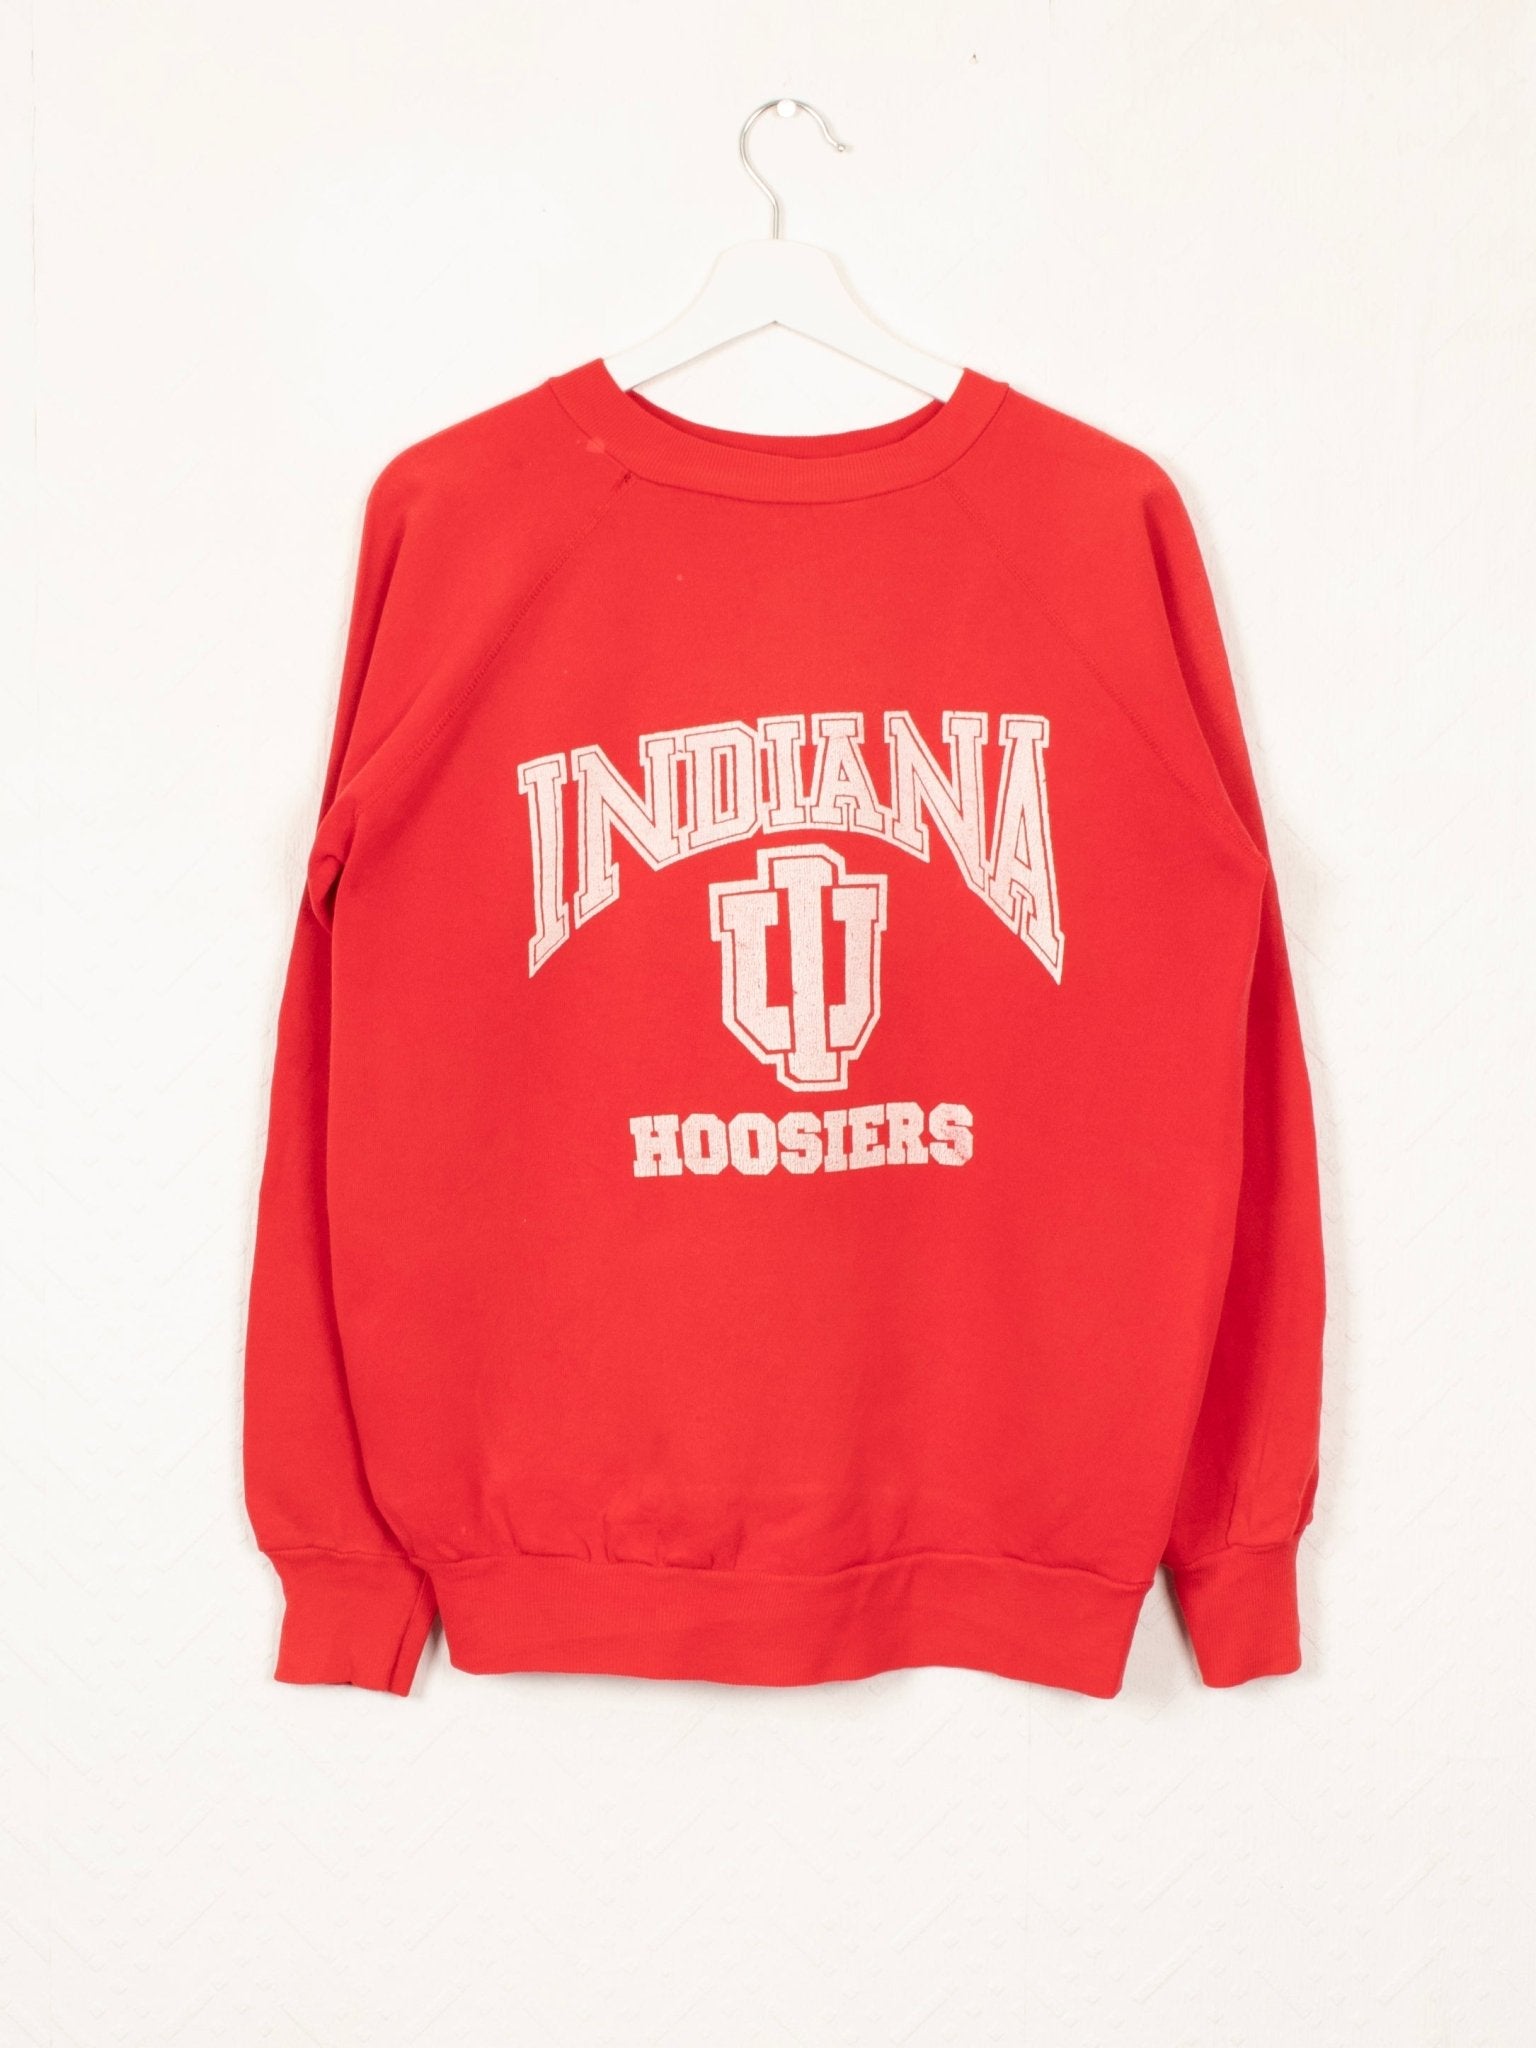 1980s "Indiana Hoosiers" Sweatshirt